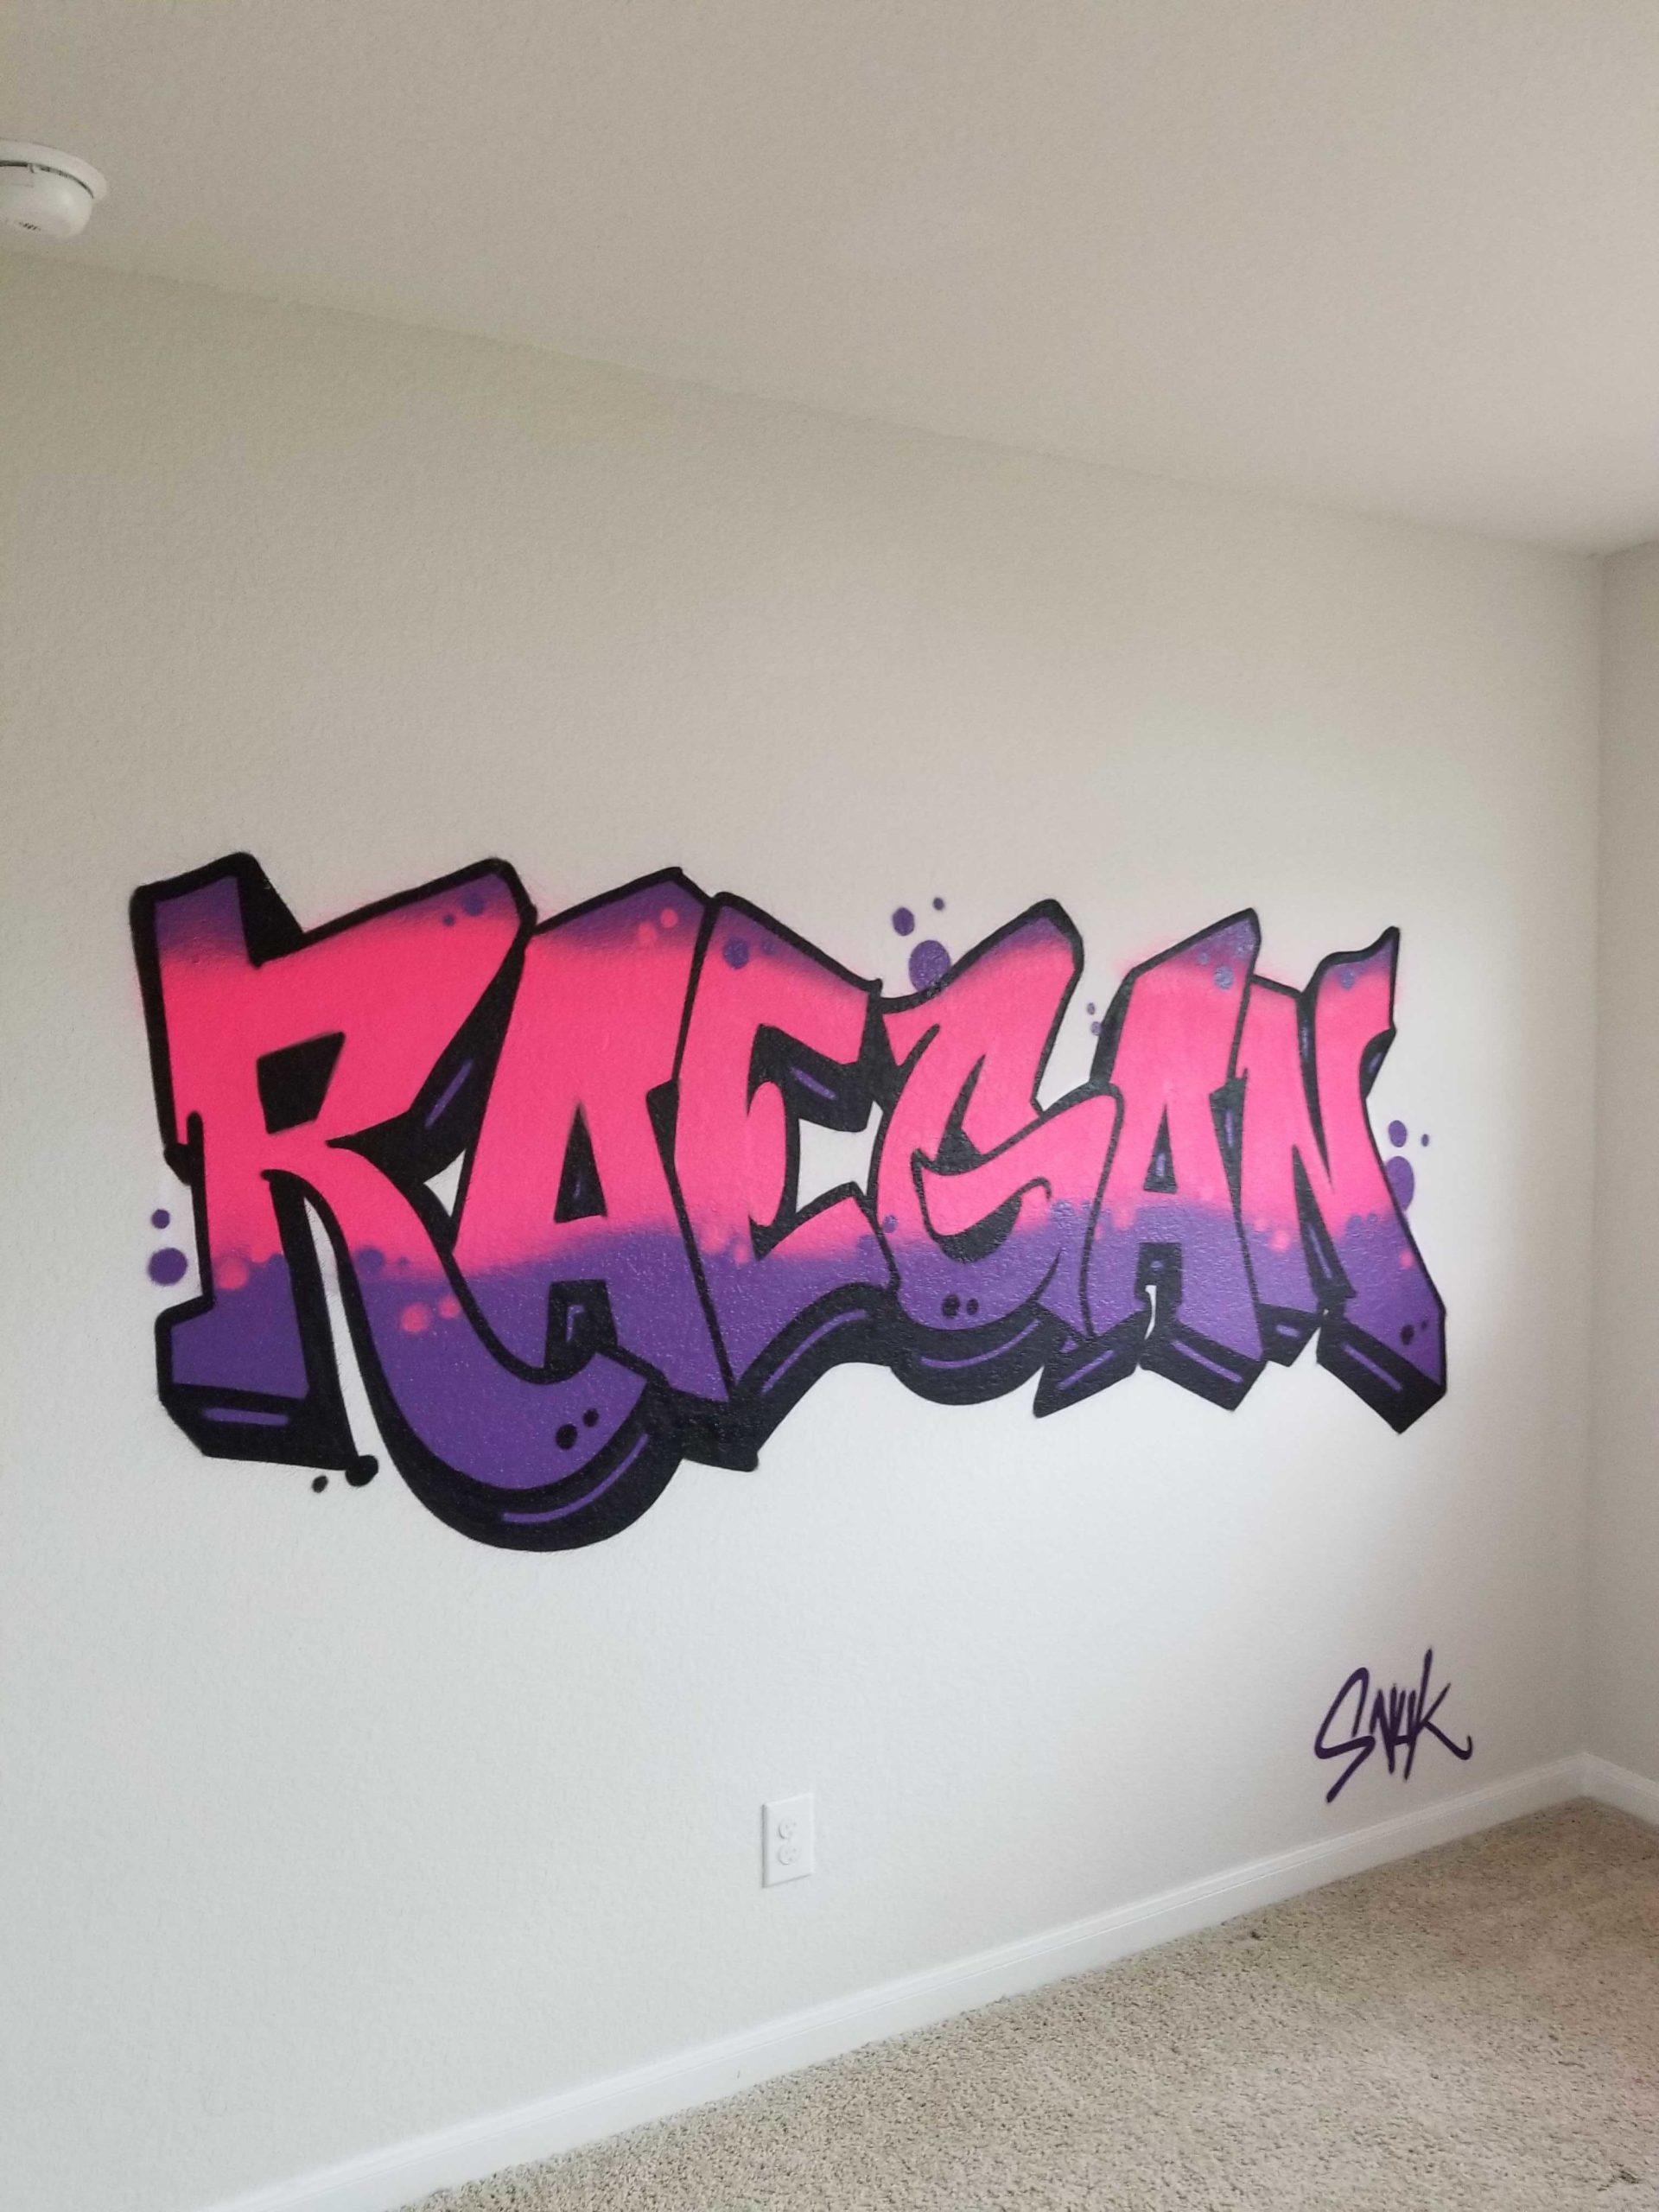 A pink and purple Raegan graffiti mural inside a room